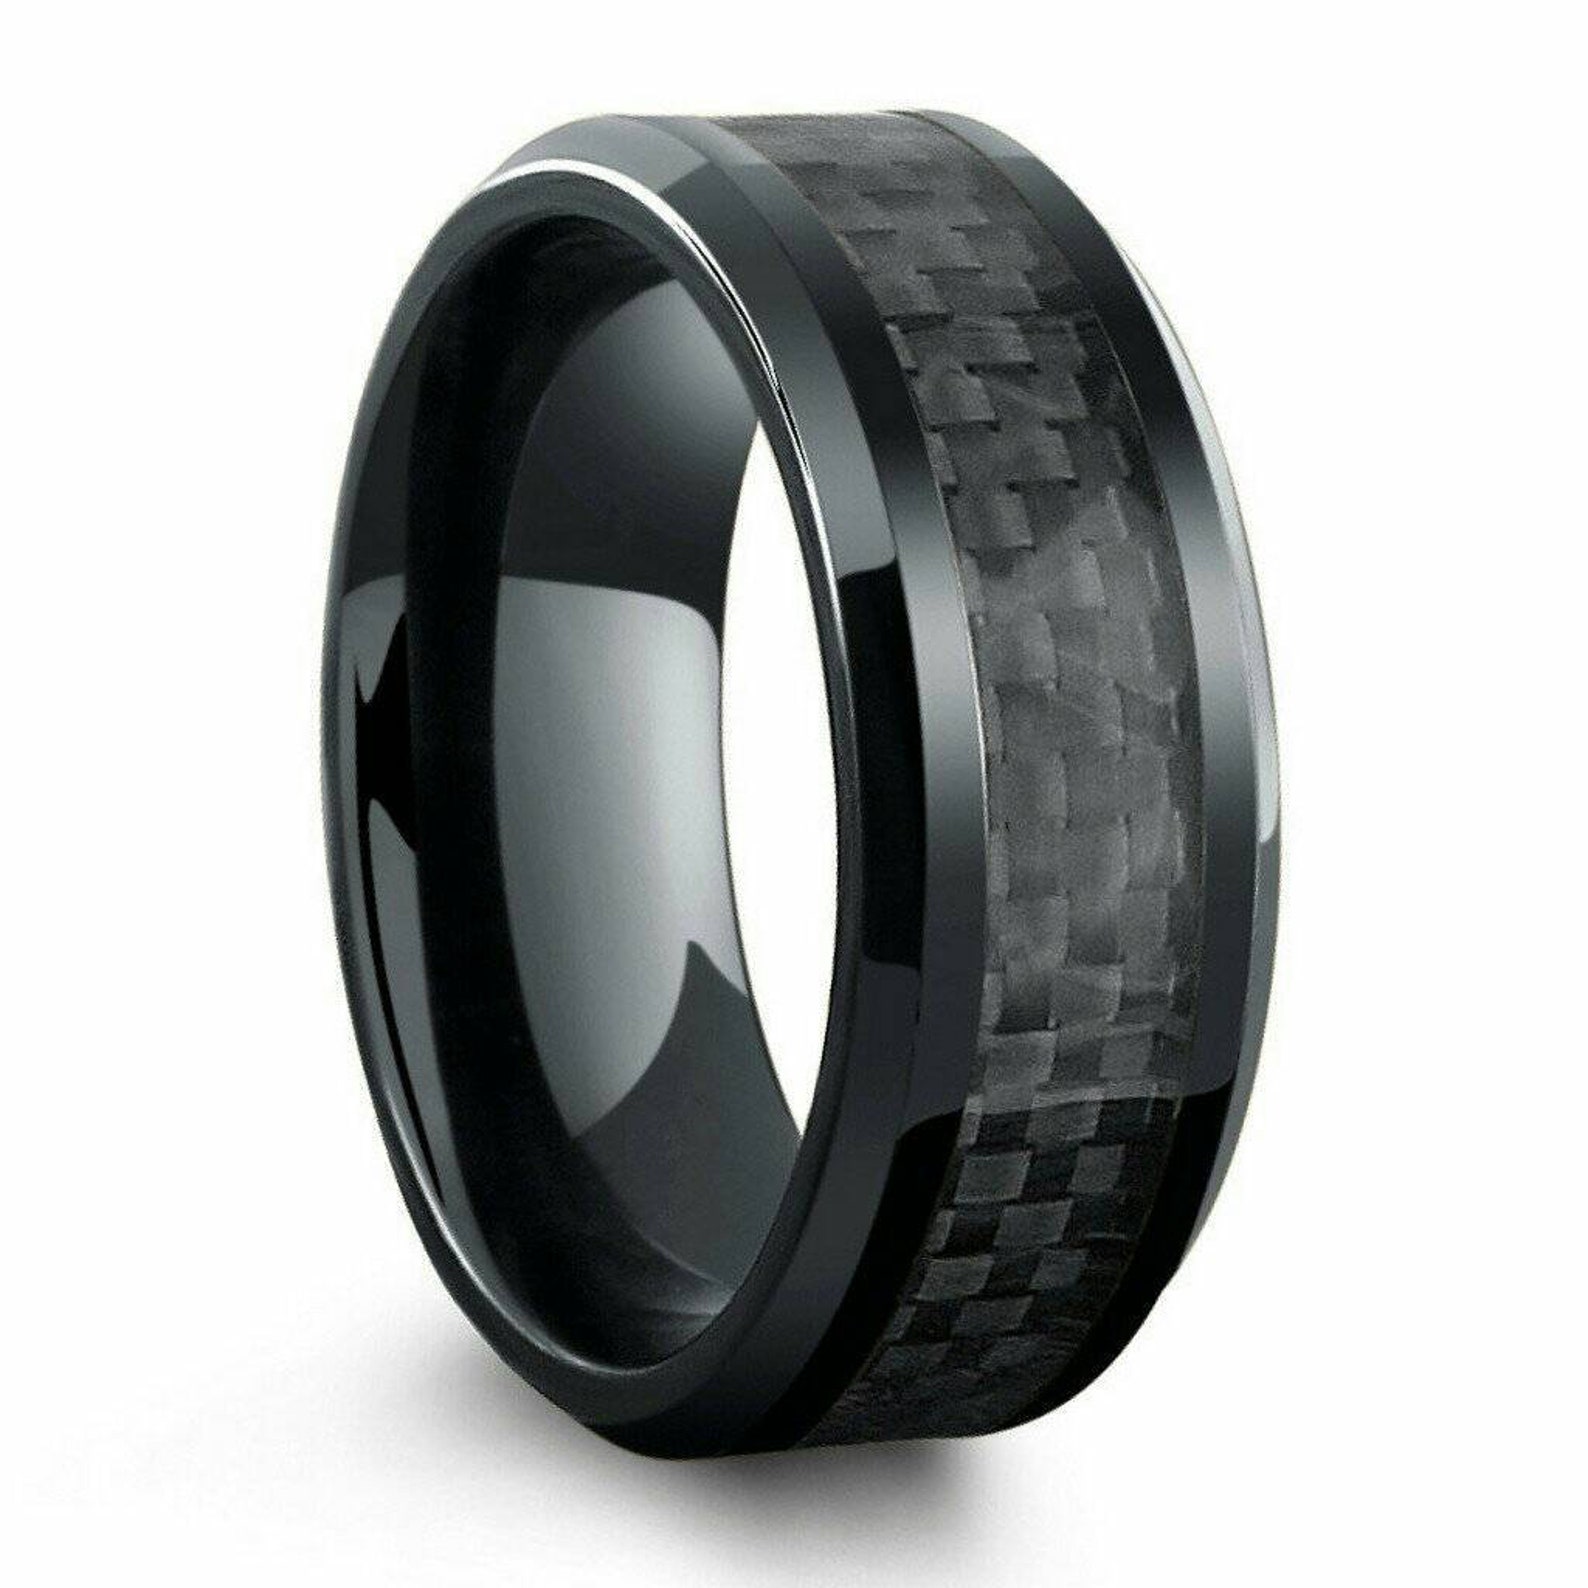 Титановое кольцо купить. Кольцо Титаниум. Ring Titan Pirelli. Черное титановое кольцо. Титановое кольцо мужское.